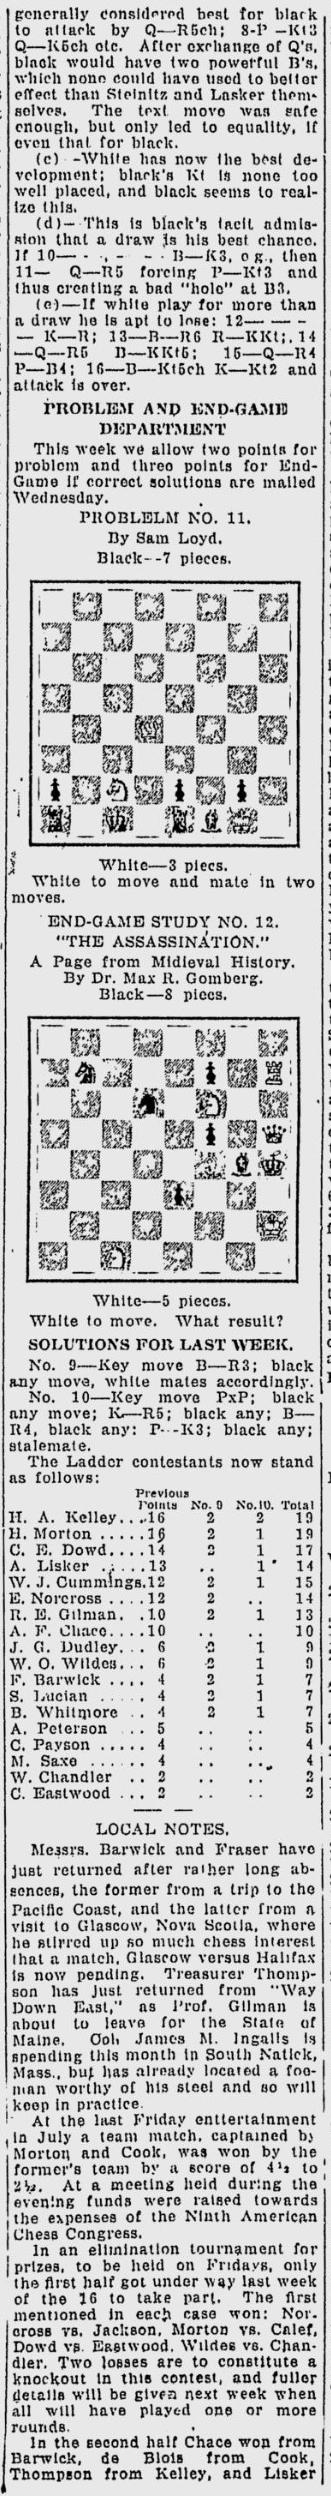 1923.08.04-03 Providence News.jpg